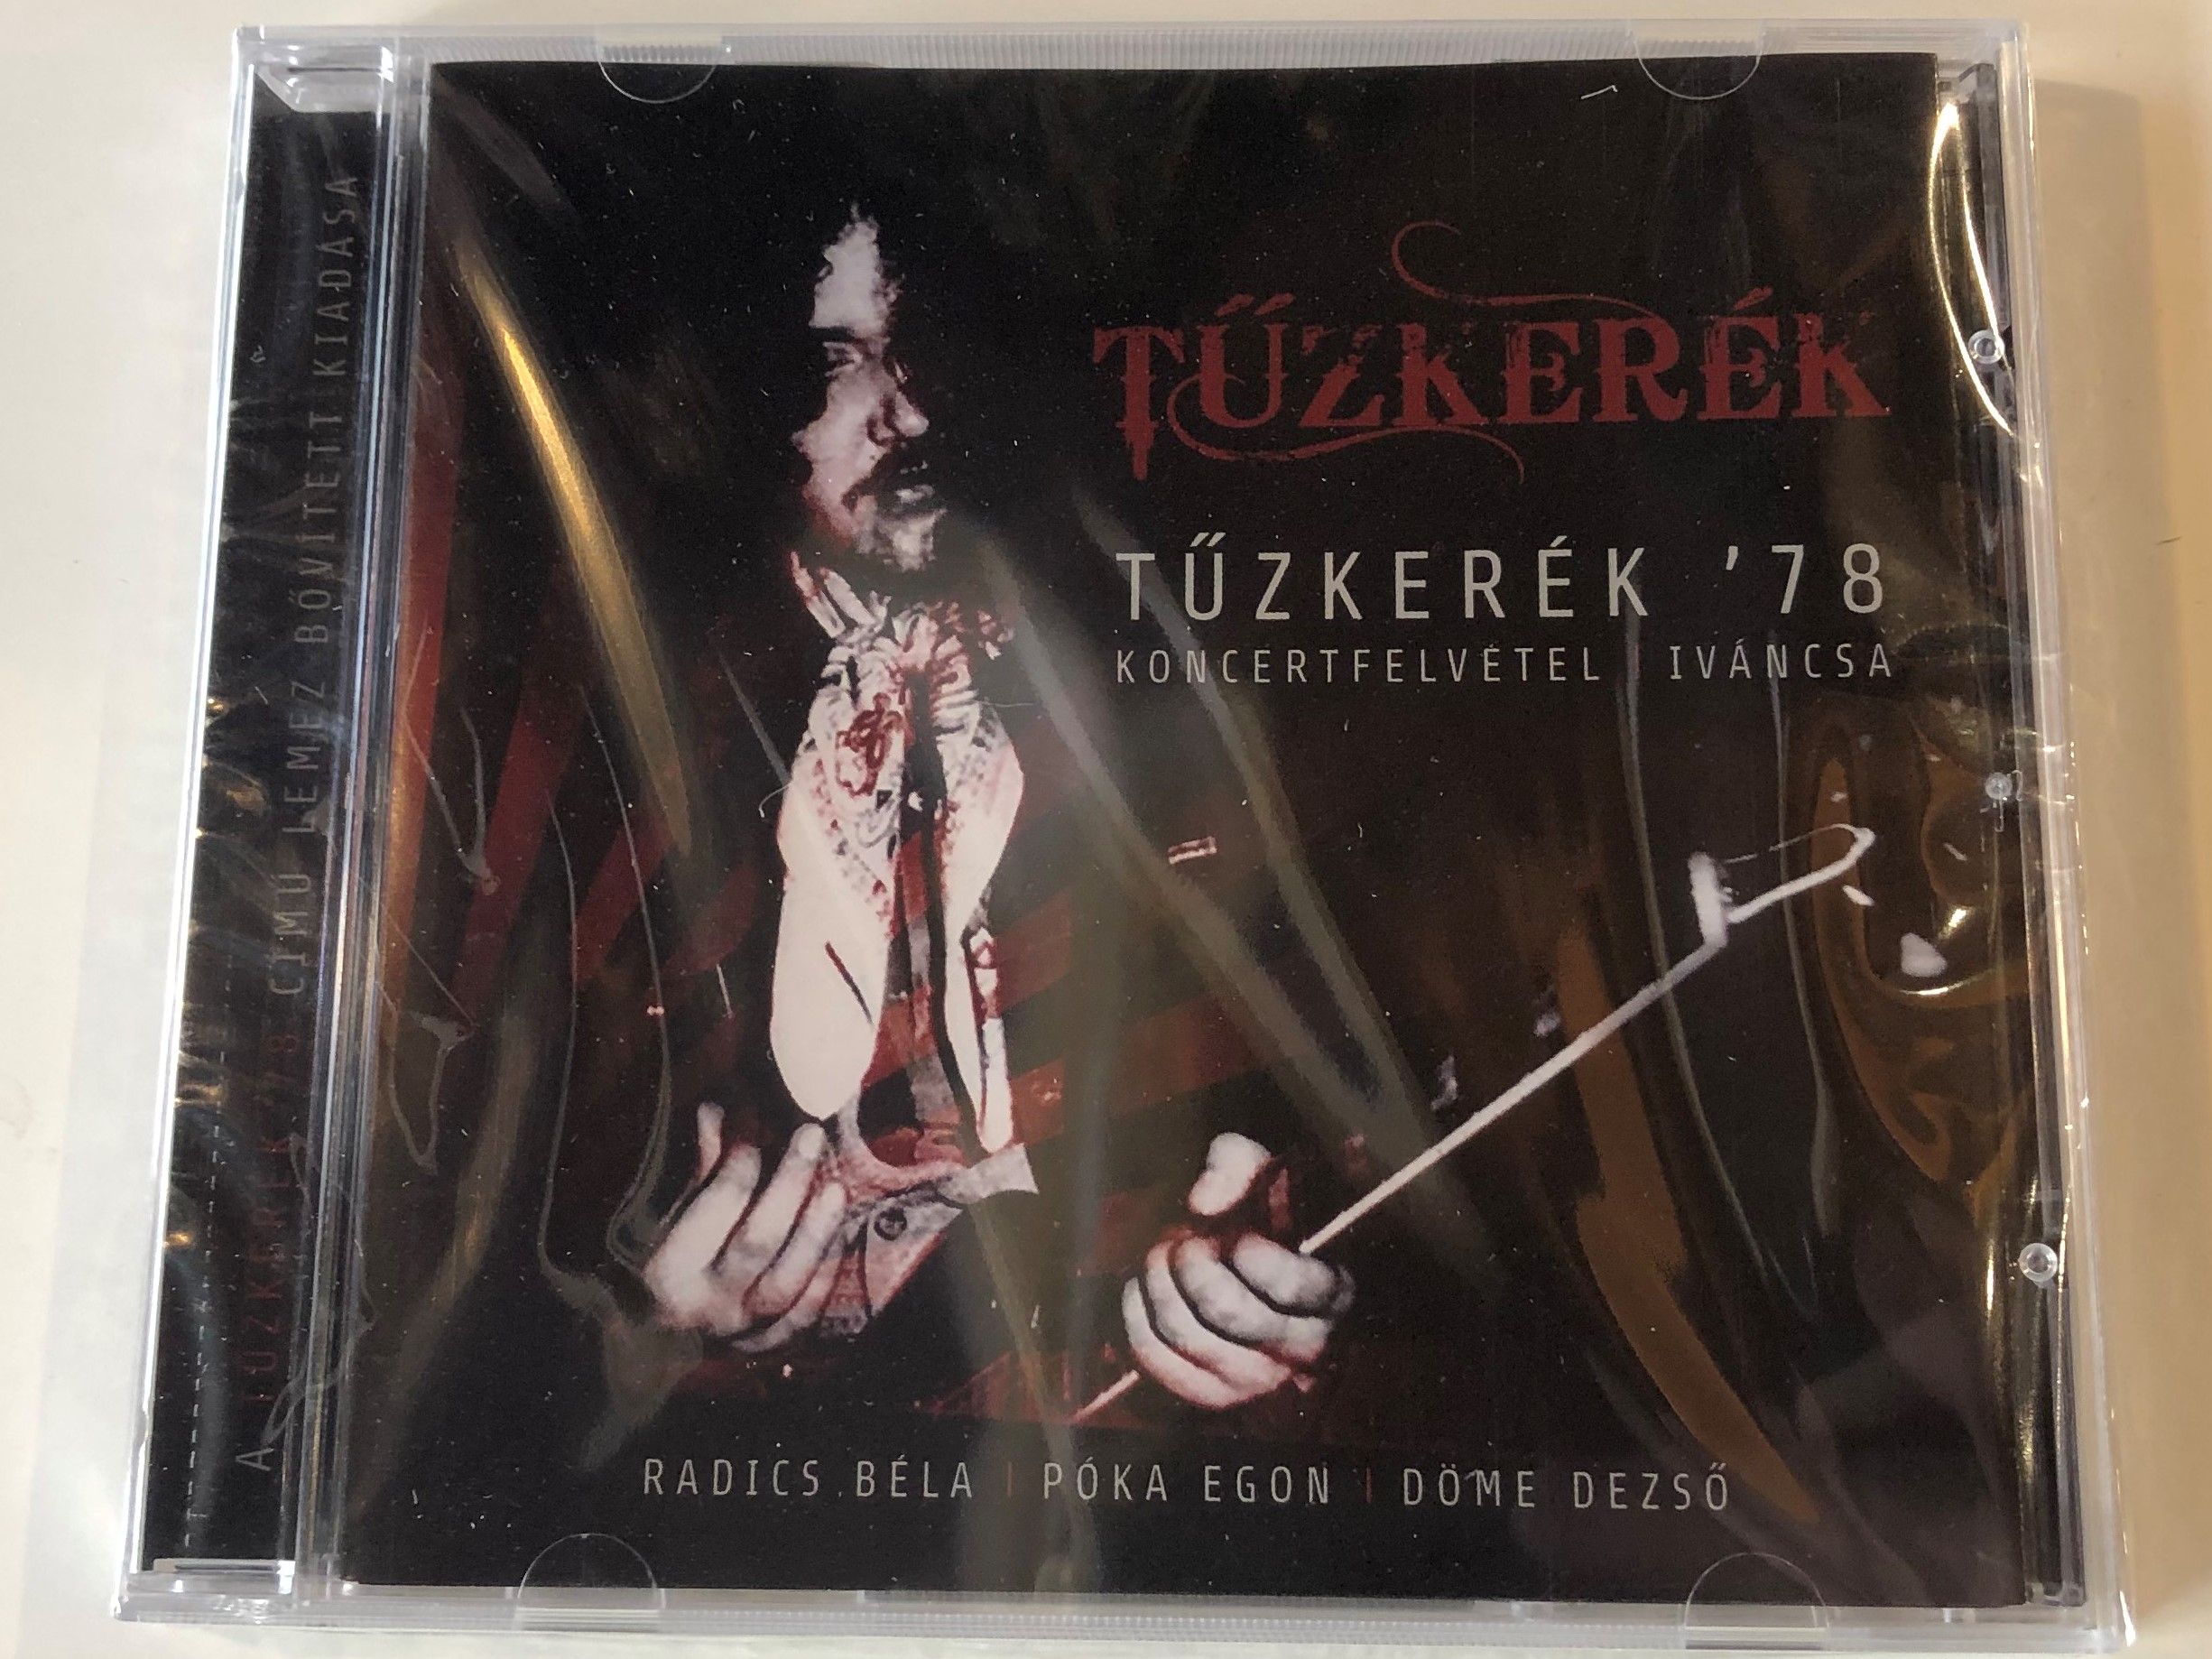 t-zker-k-t-zker-k-78-koncertfelv-tel-iv-ncsa-radics-bela-poka-egon-dome-dezso-grundrecords-audio-cd-2014-gr027-1-.jpg